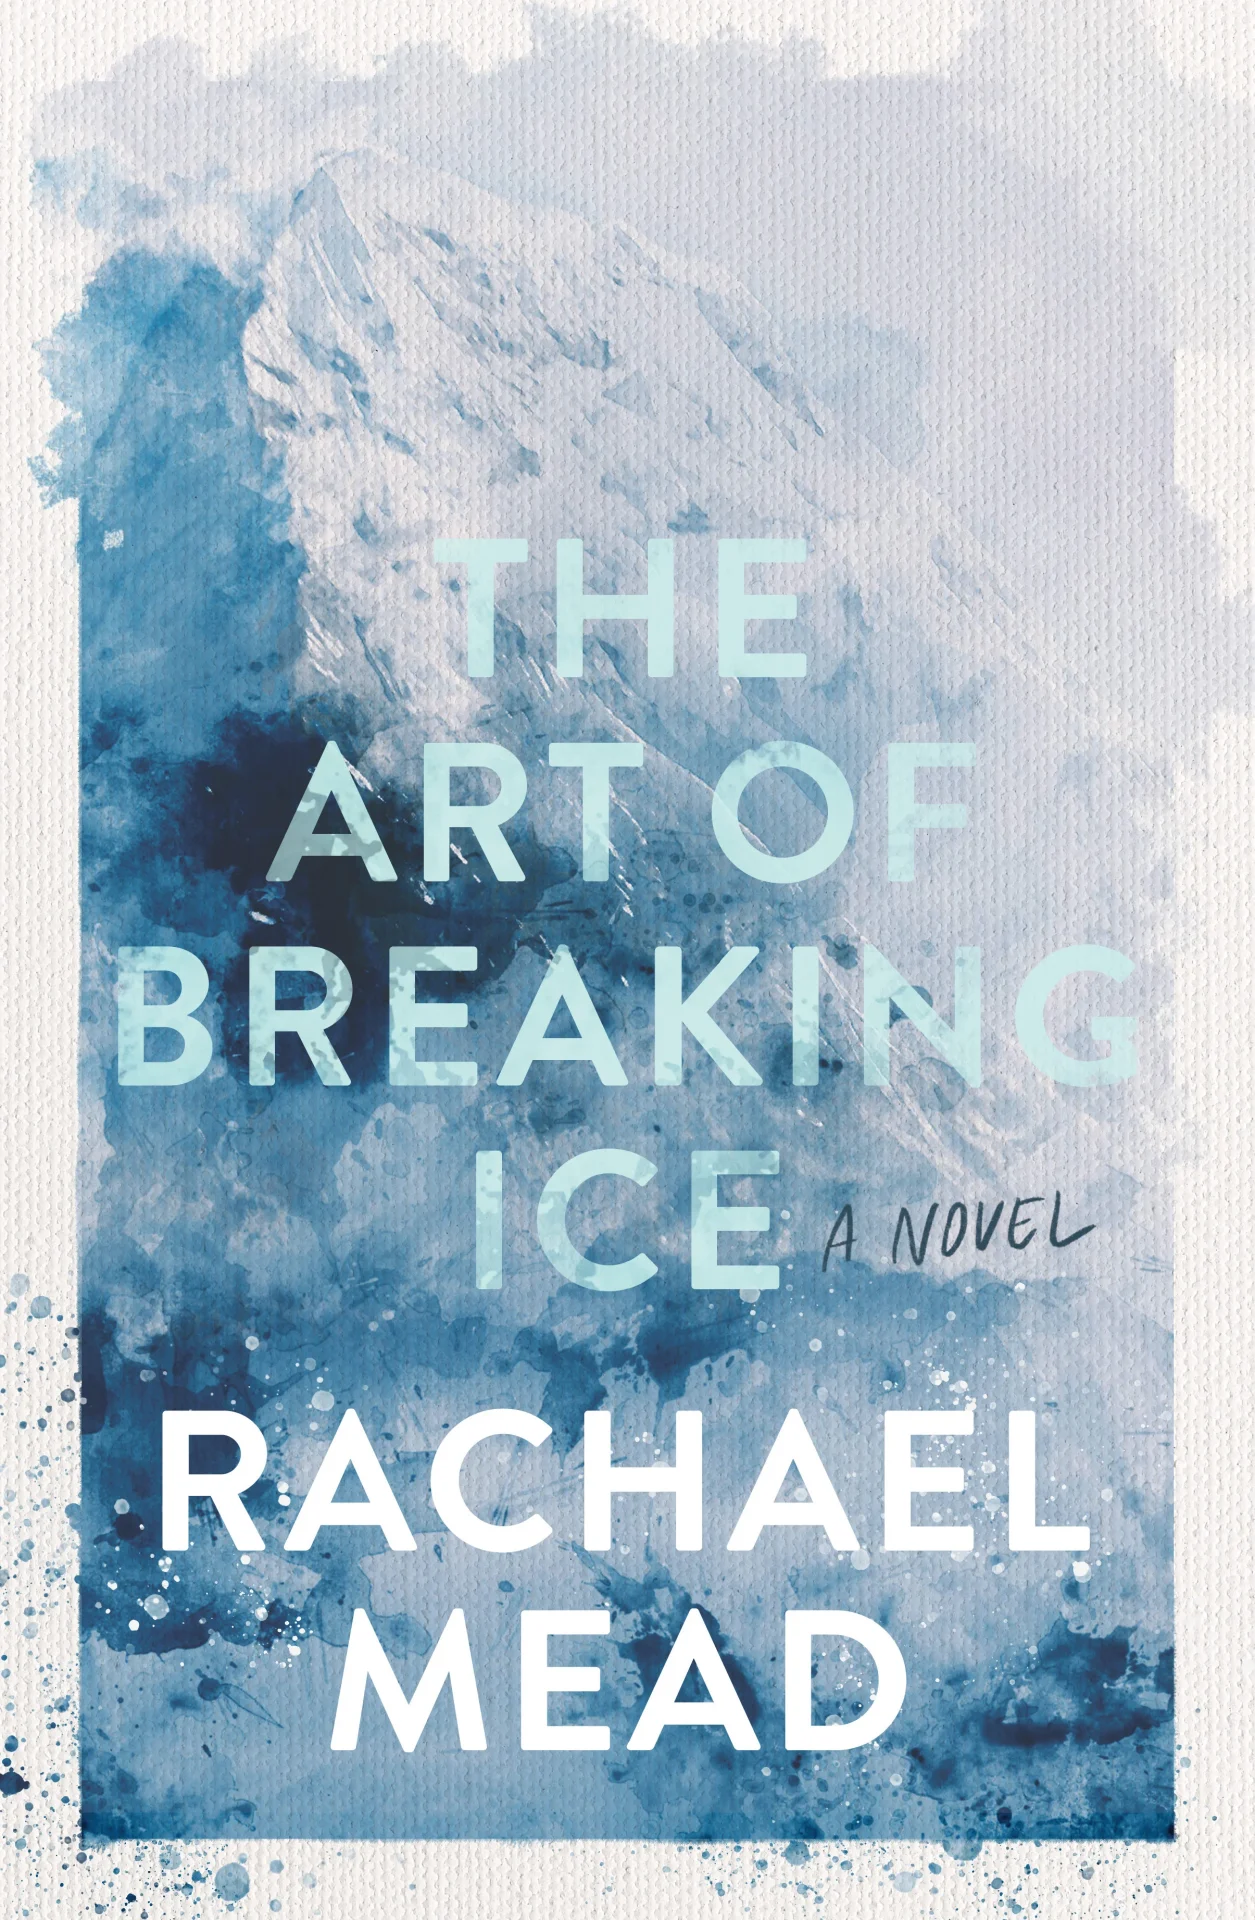 The Art of Breaking Ice